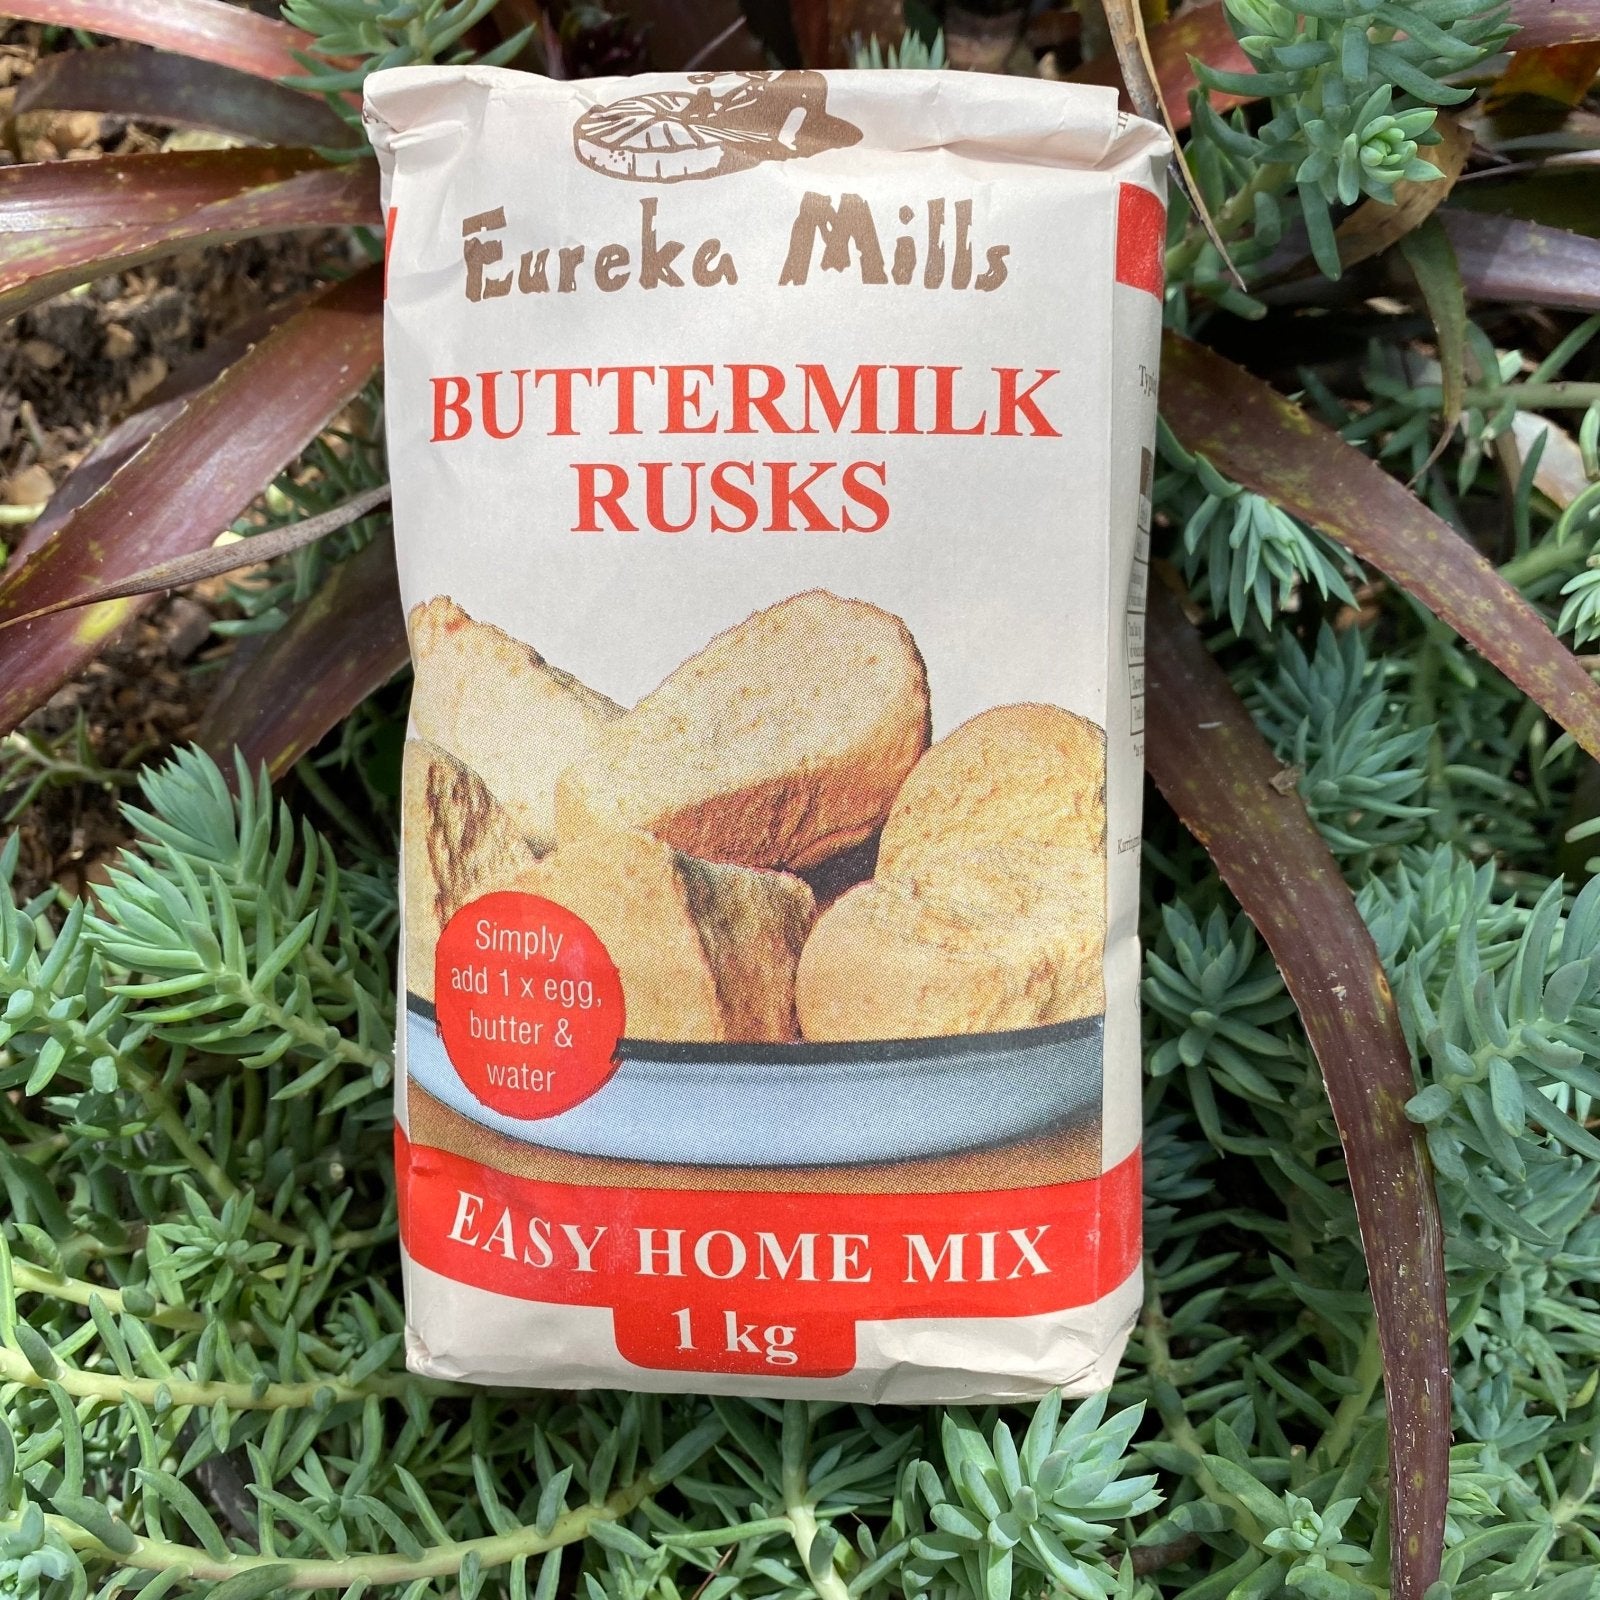 Eureka Mills Buttermilk Rusks Easy Home Mix (1kg) - The Deli